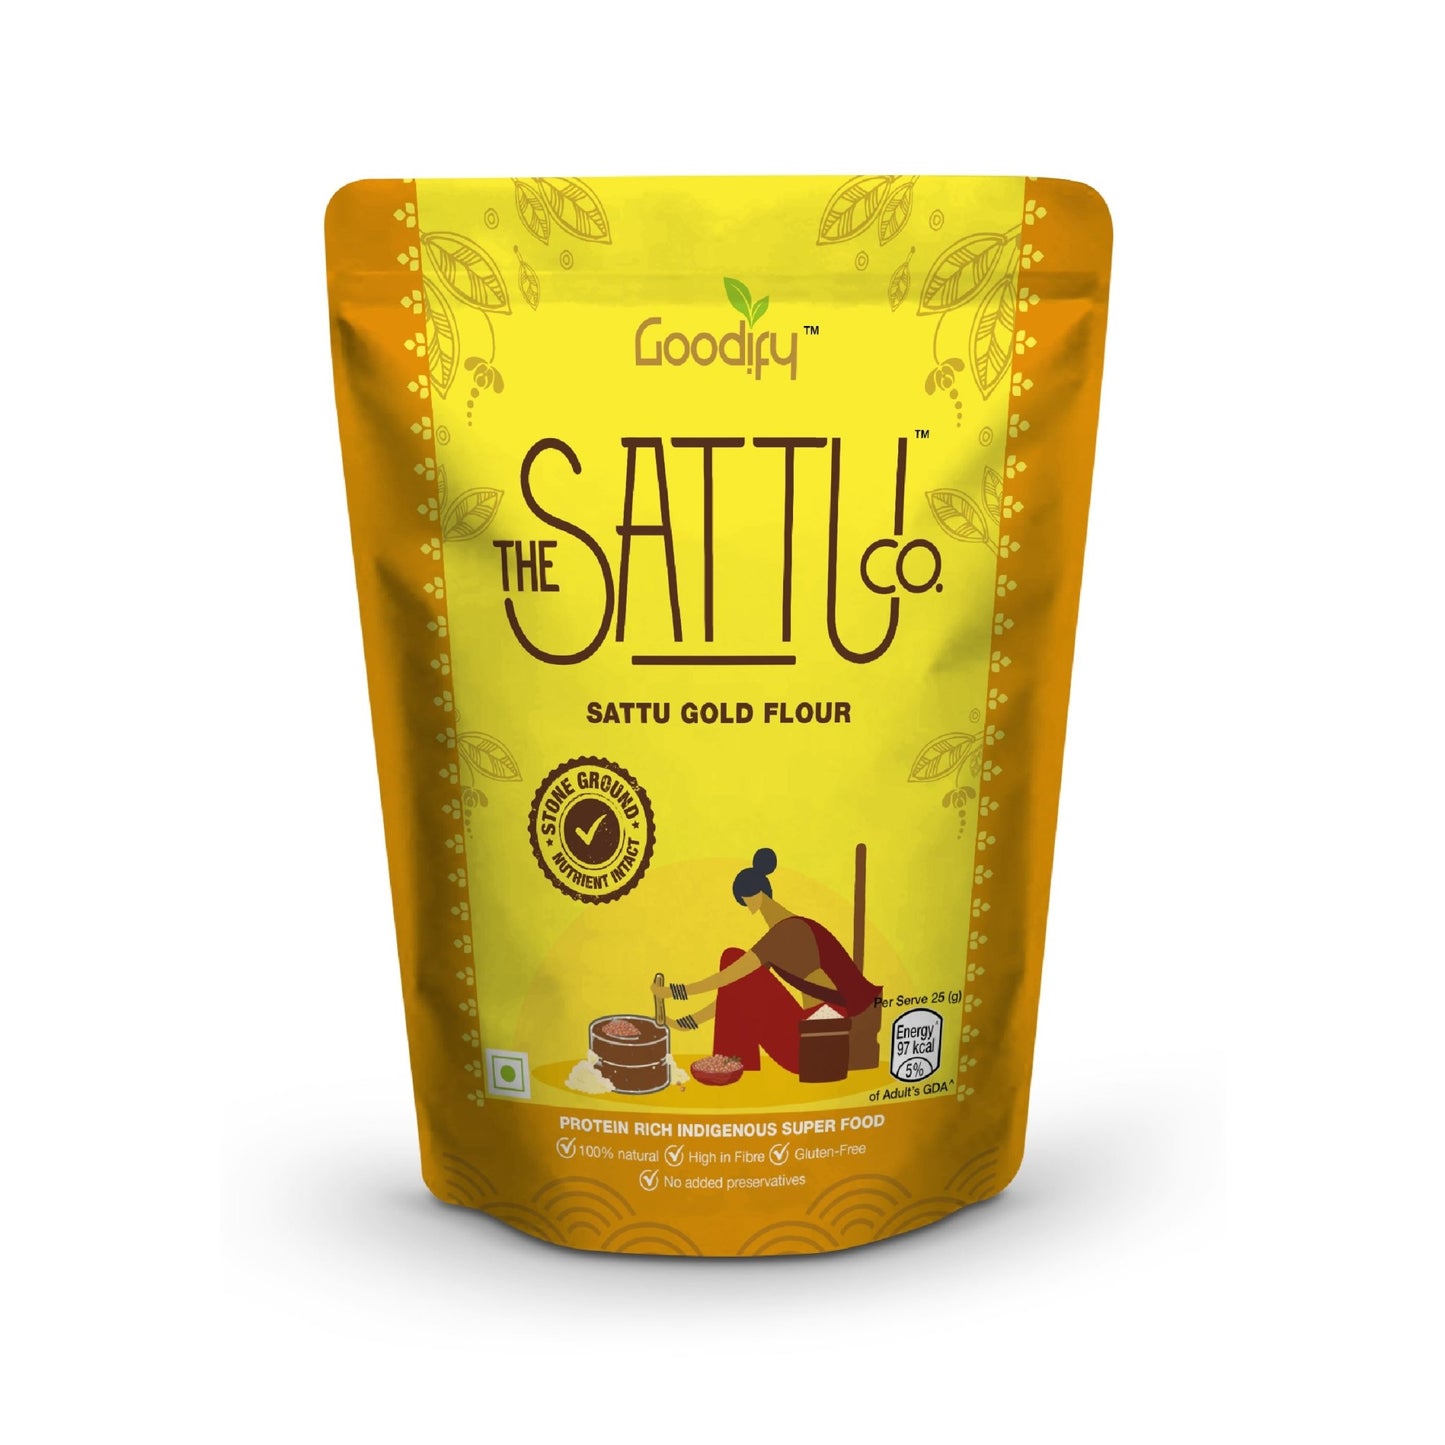 Sattu Gold Flour - thesattuco.com